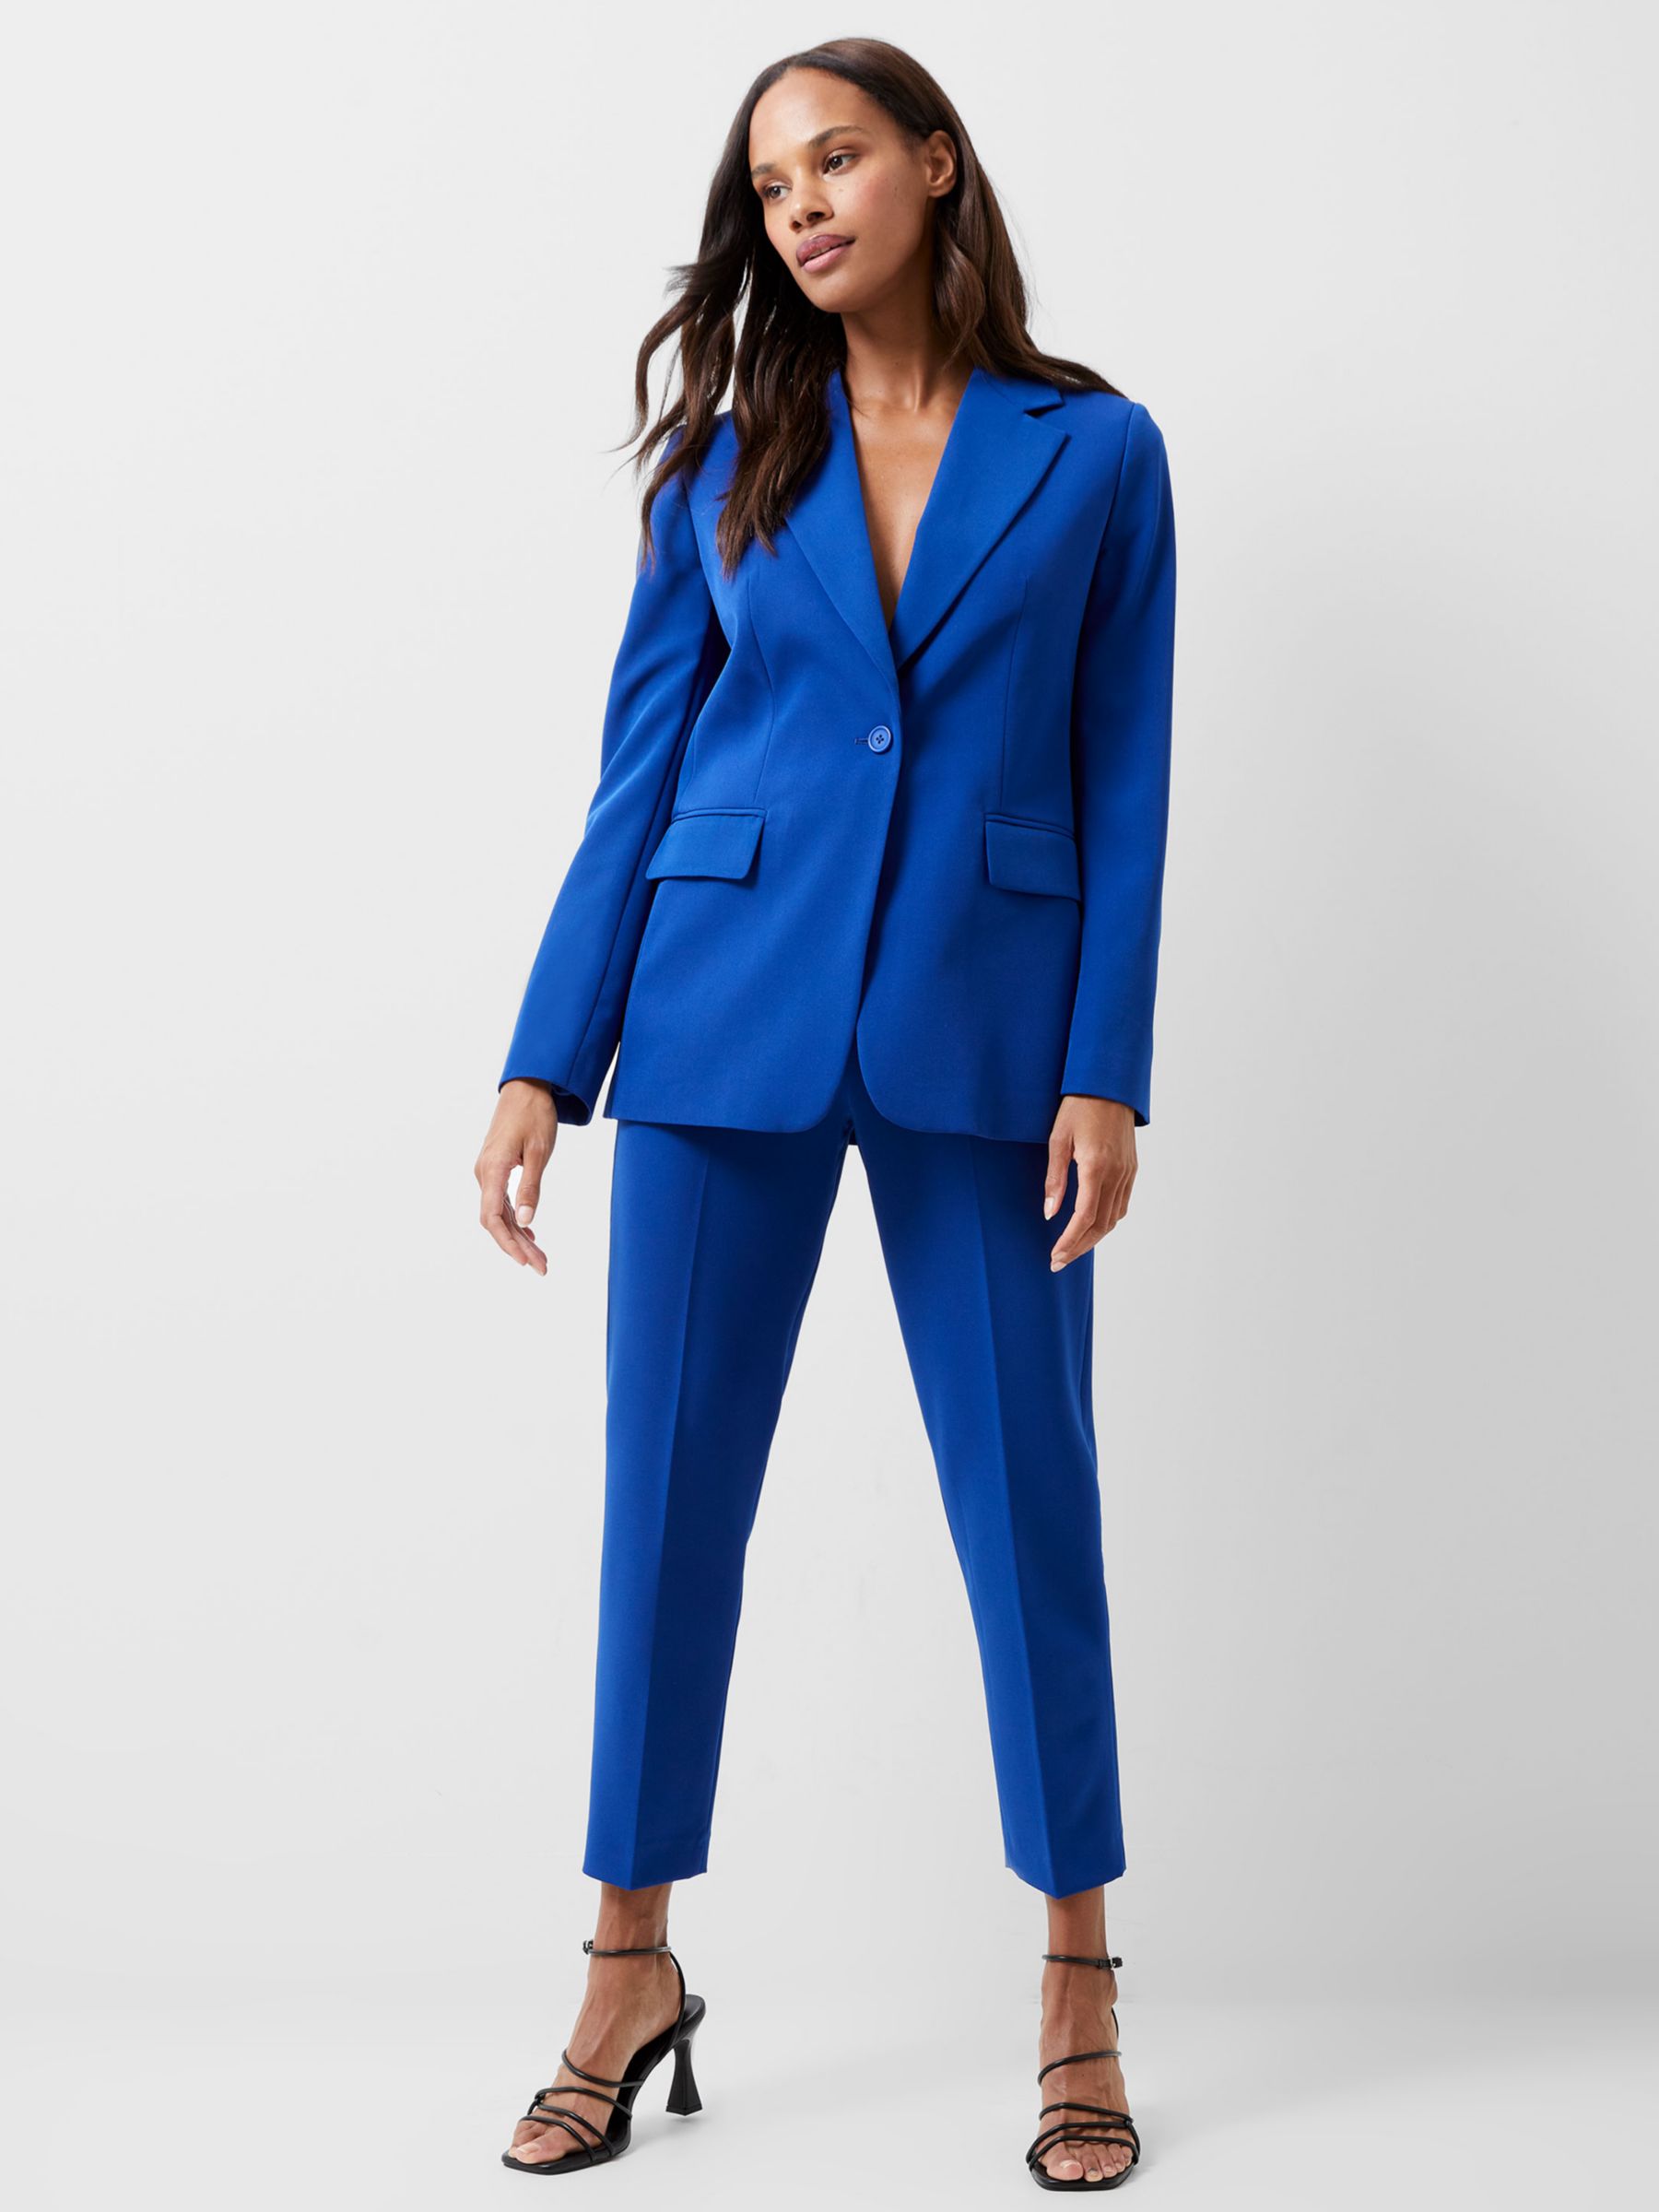 WELLINGTON SUITS Women's Elegant Stylish Office Fashion Light Blue Sky Blue  Blazer Jacket & Pants Suit Set